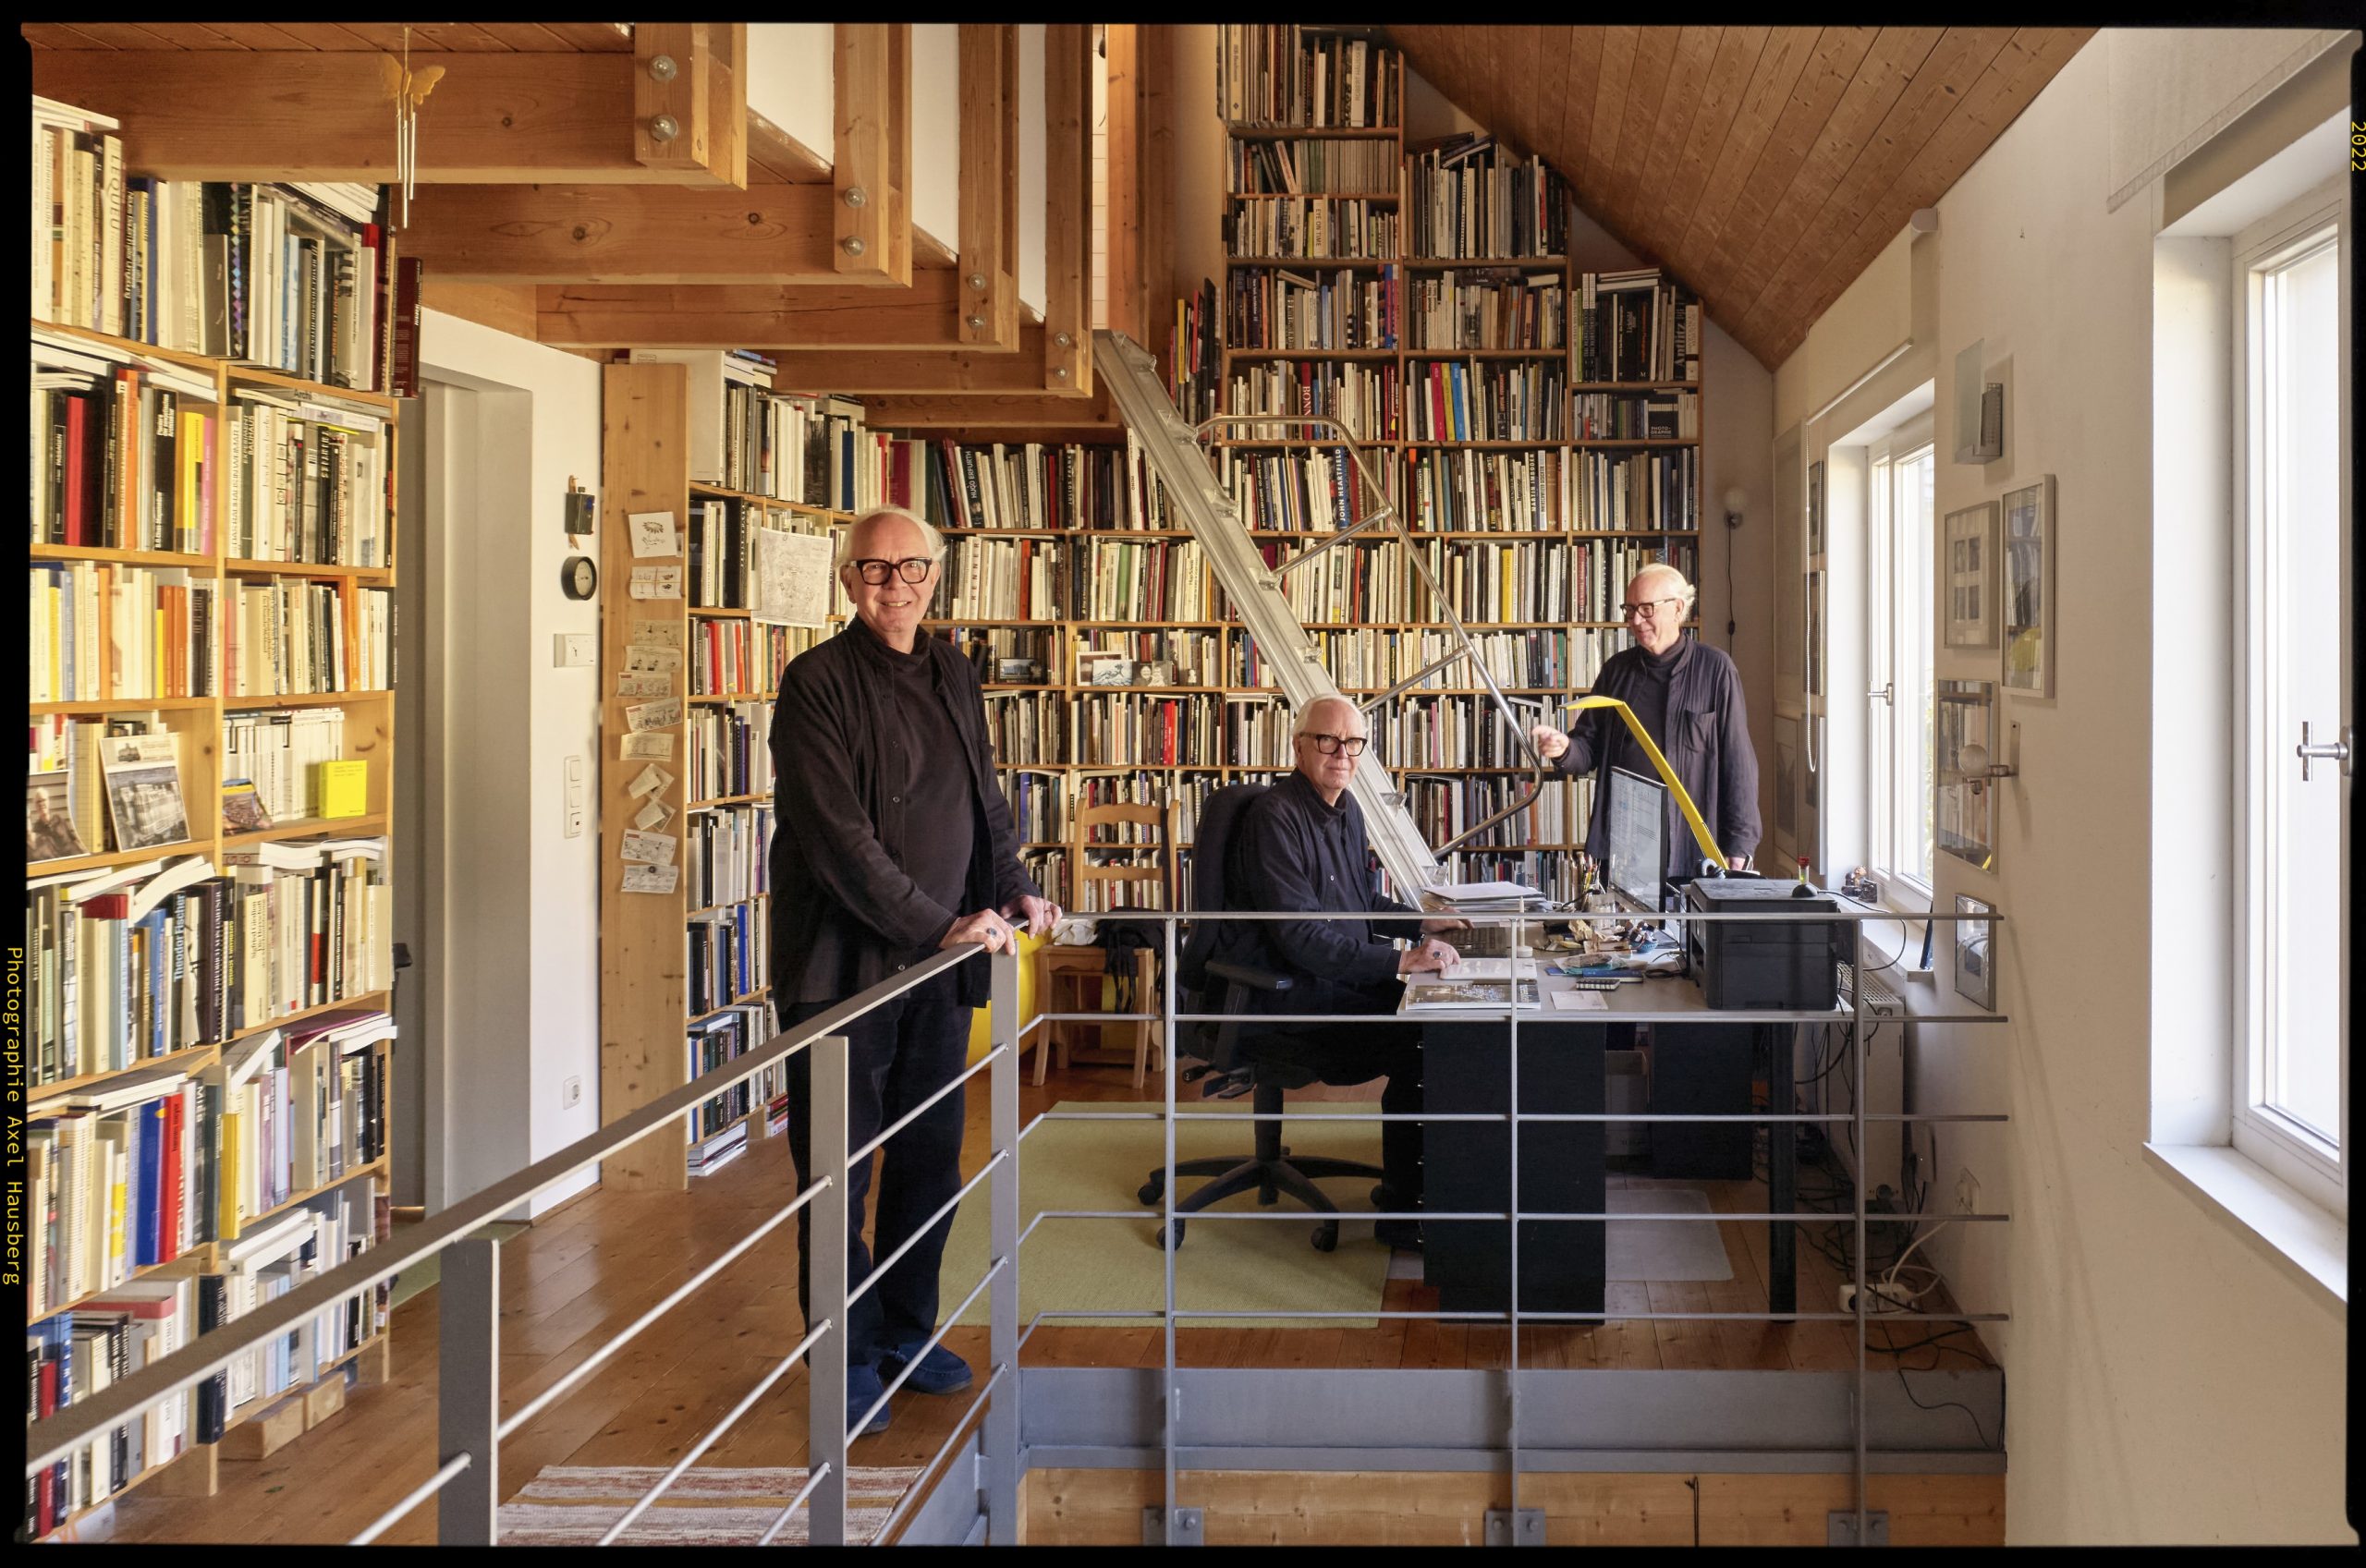 Exhibition: Architecture & Photobooks by Rolf Sachsse